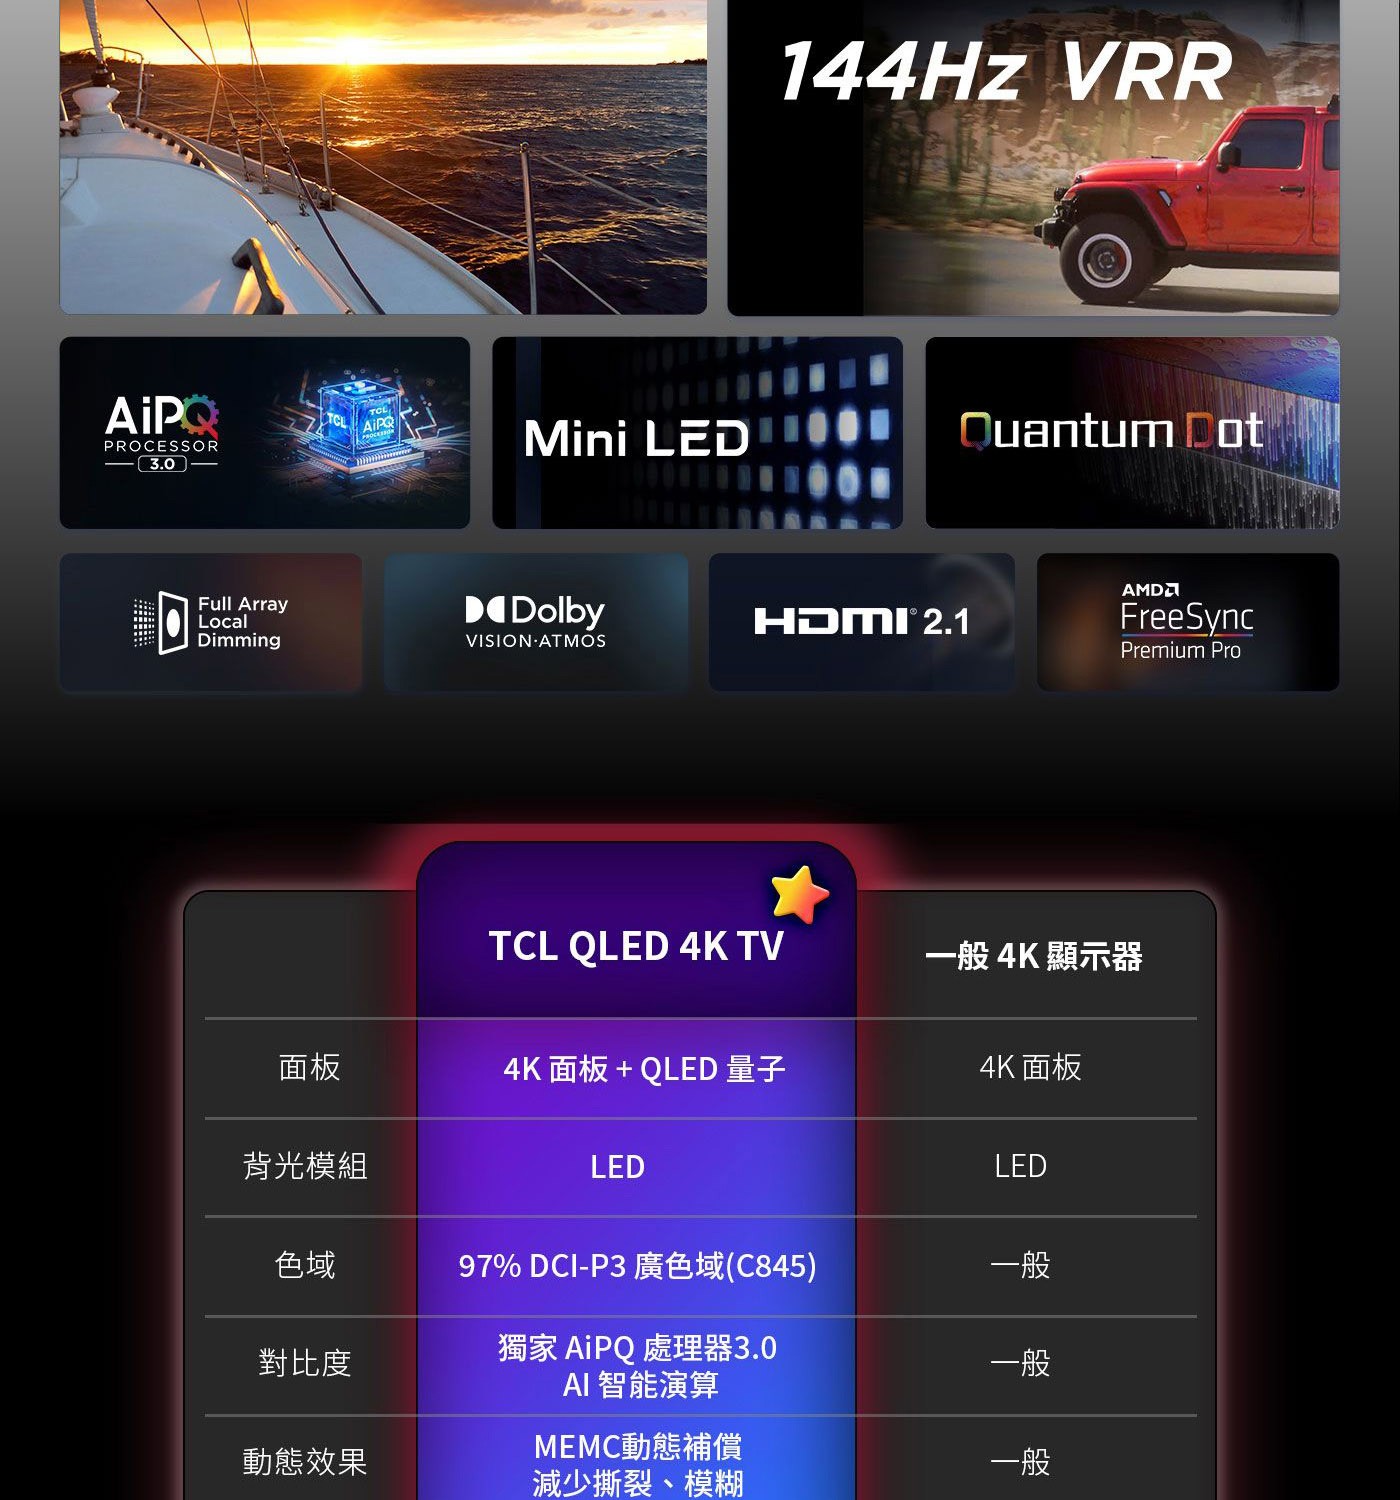 TCL 85吋 4K Mini LED QLED Google TV 量子智能連網液晶顯示器 85C845 HDR 2000 nits璀璨亮度 驚艷奪目